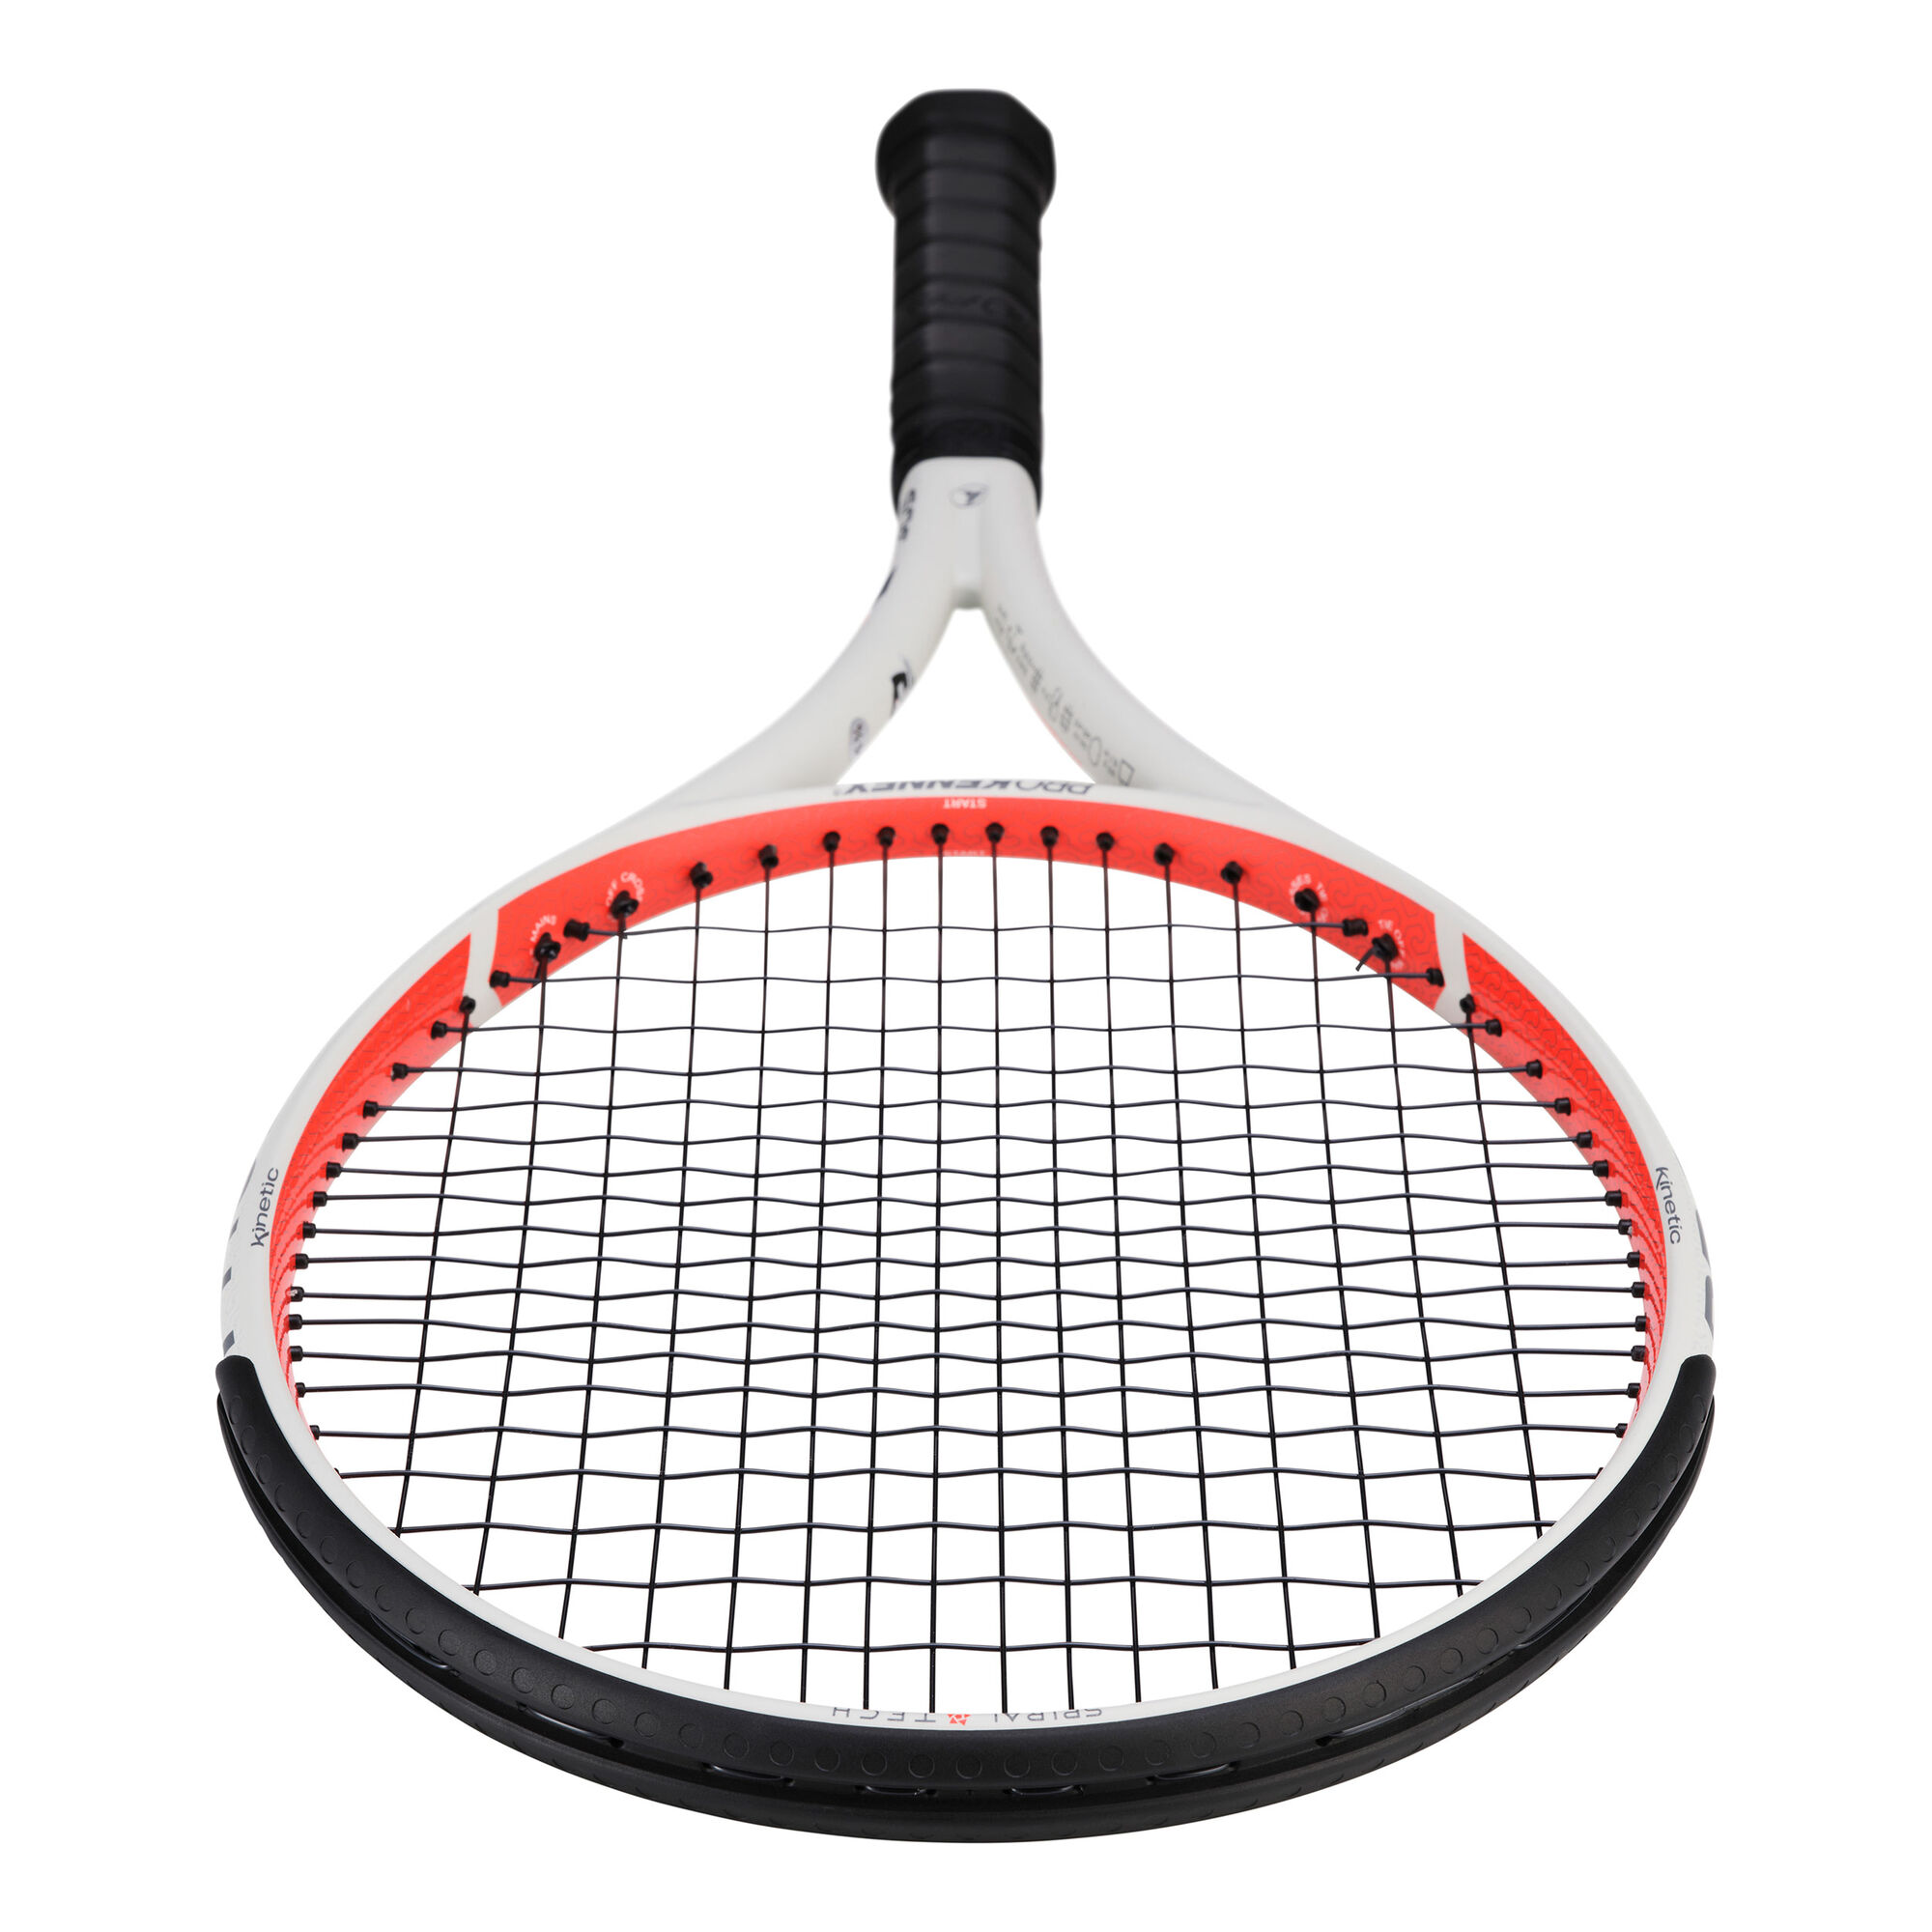 Point Buy | Kinetic (305g) 10 PROKENNEX COM Tennis online